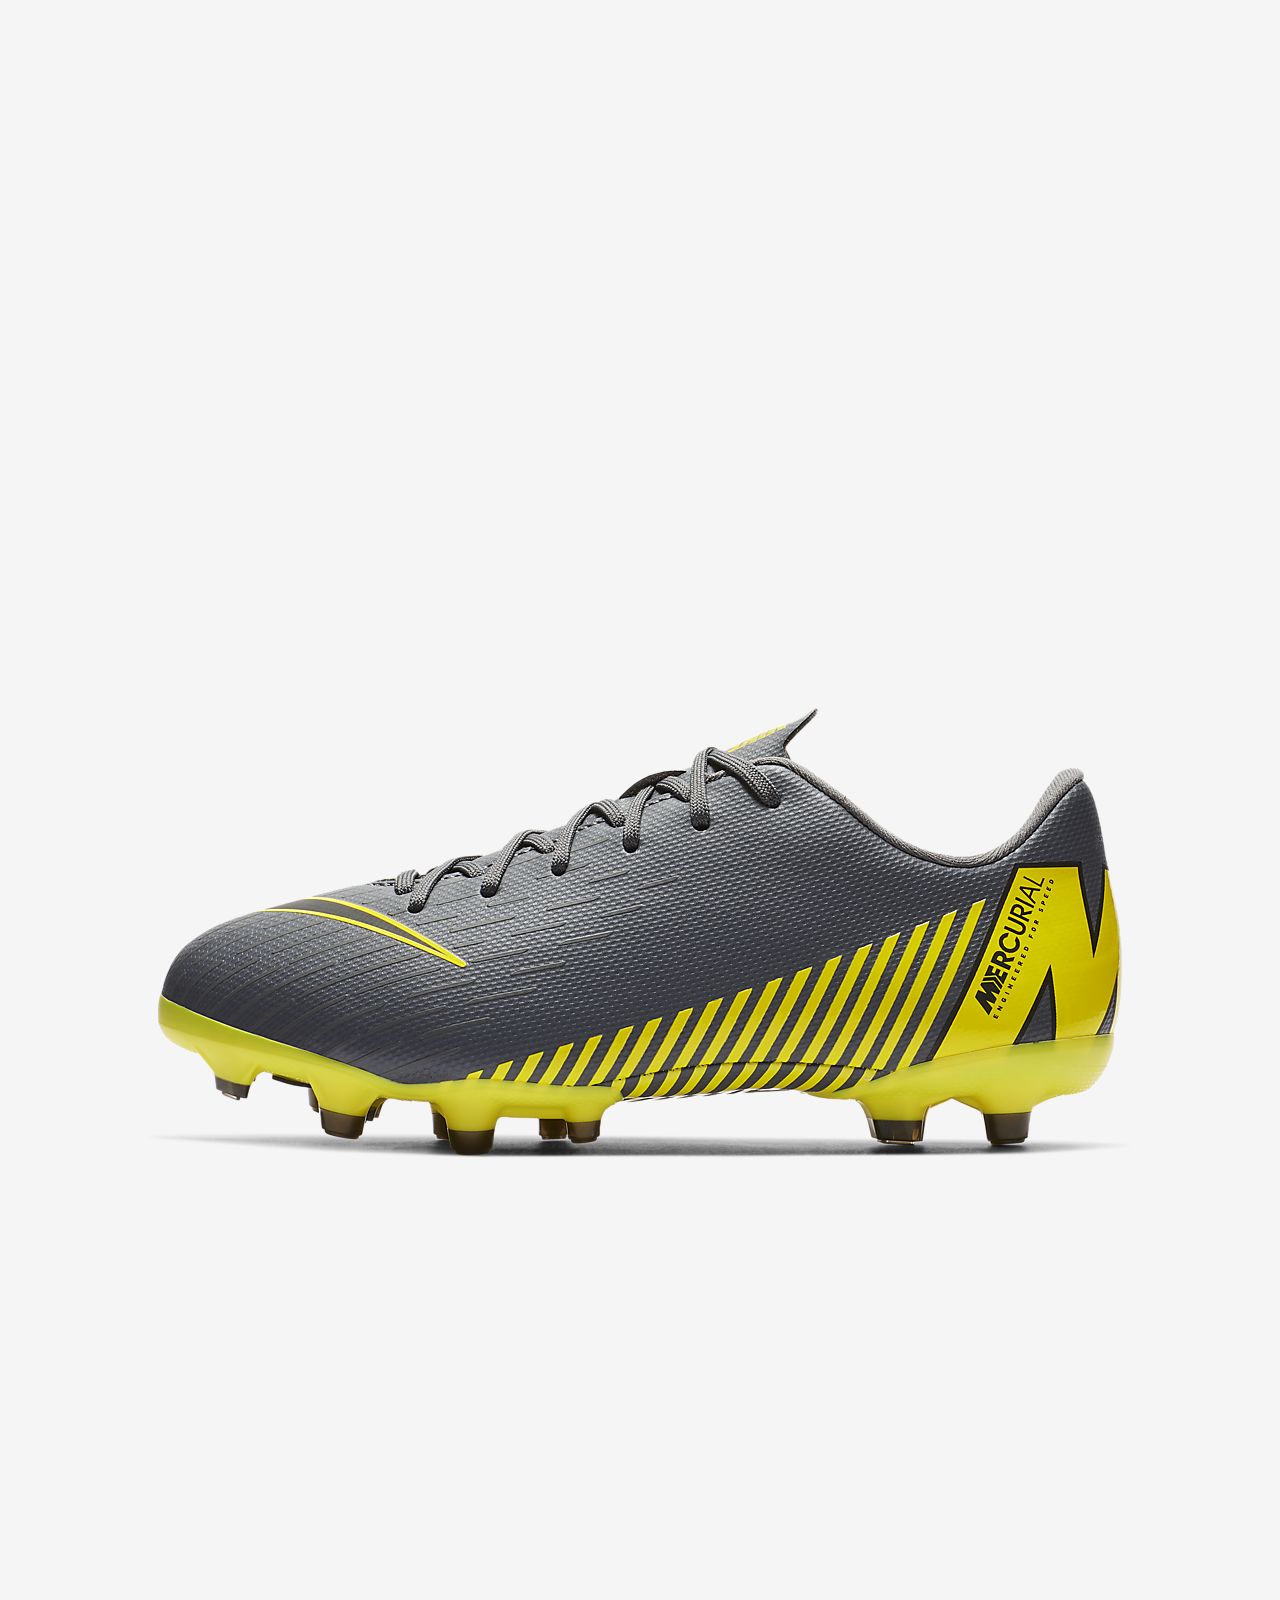 Chaussures Football Nike Mercurial Vapor Xiii Elite Fg Blanc.